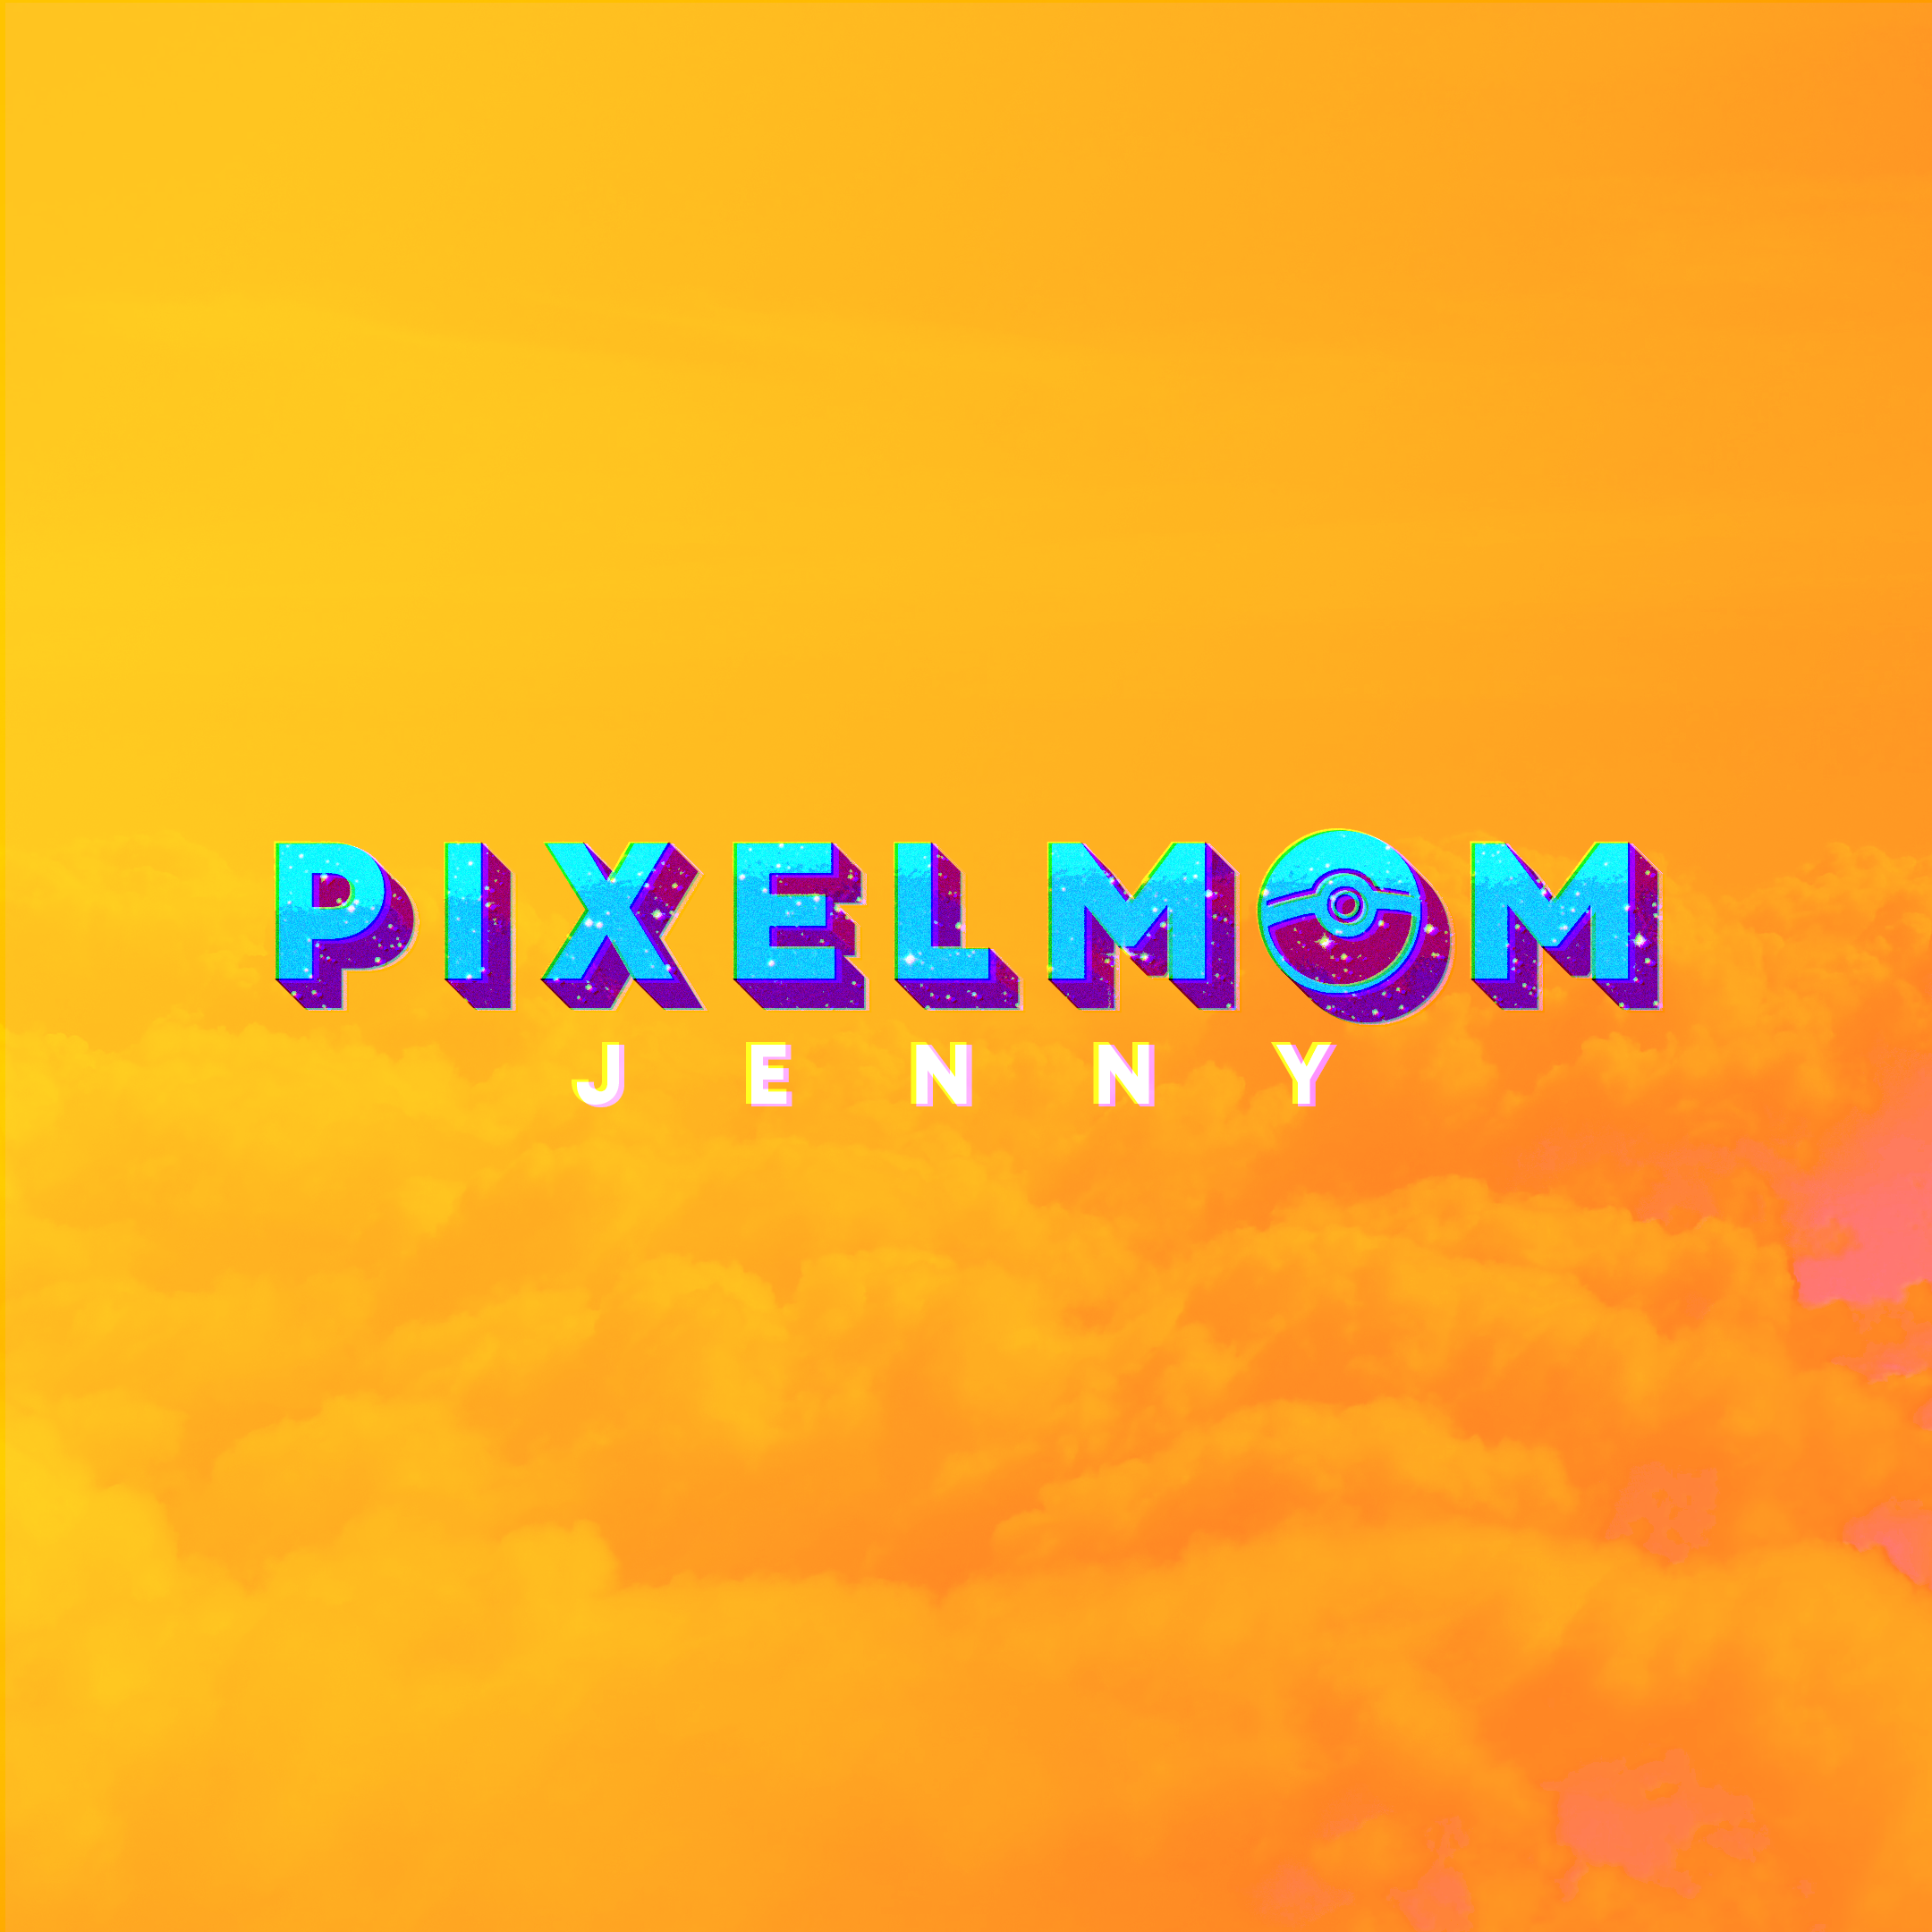 Pixelmon - Minecraft Mods - CurseForge